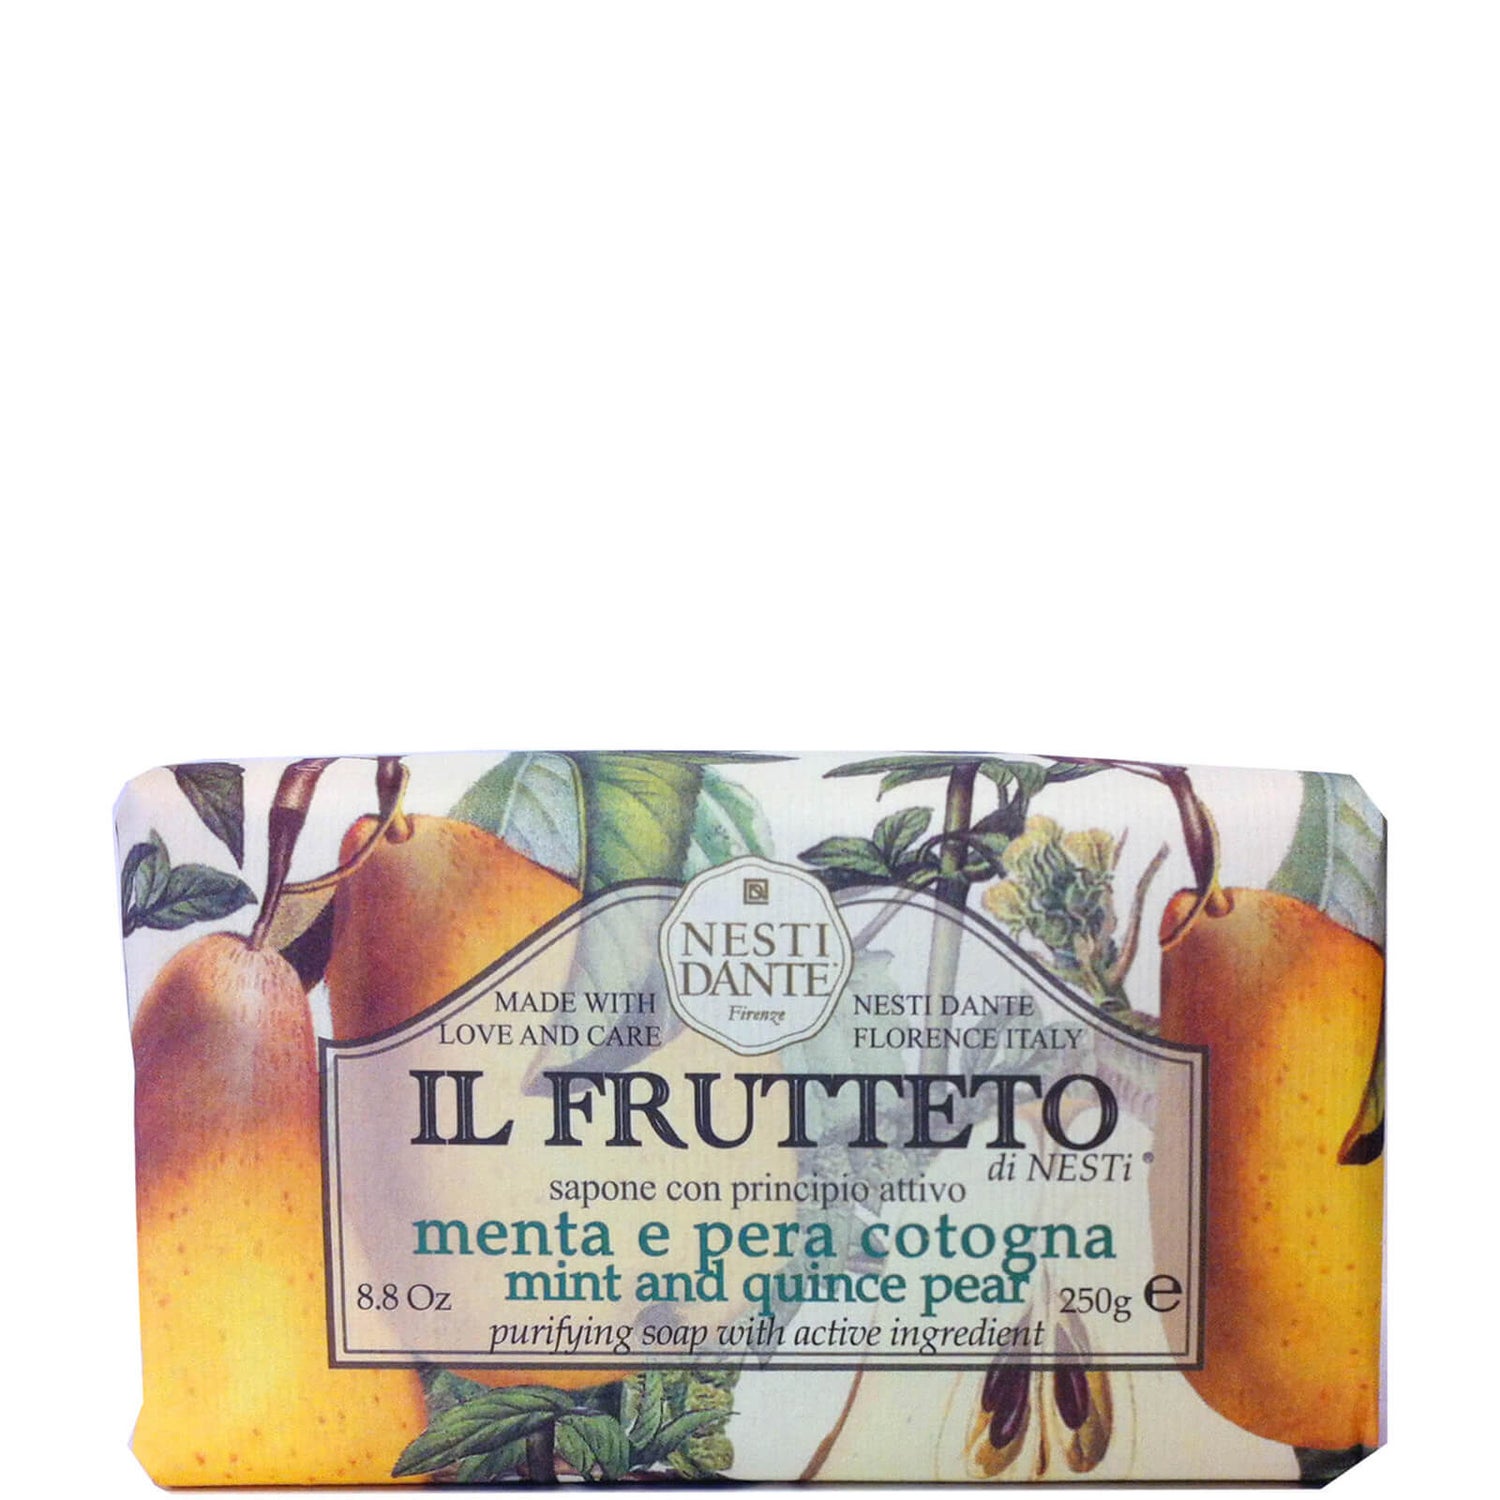 Nesti Dante Il Frutteto Mint and Quince Pear Soap(네스티 단테 일 프루테토 민트 앤 퀸스 페어 솝 250g)